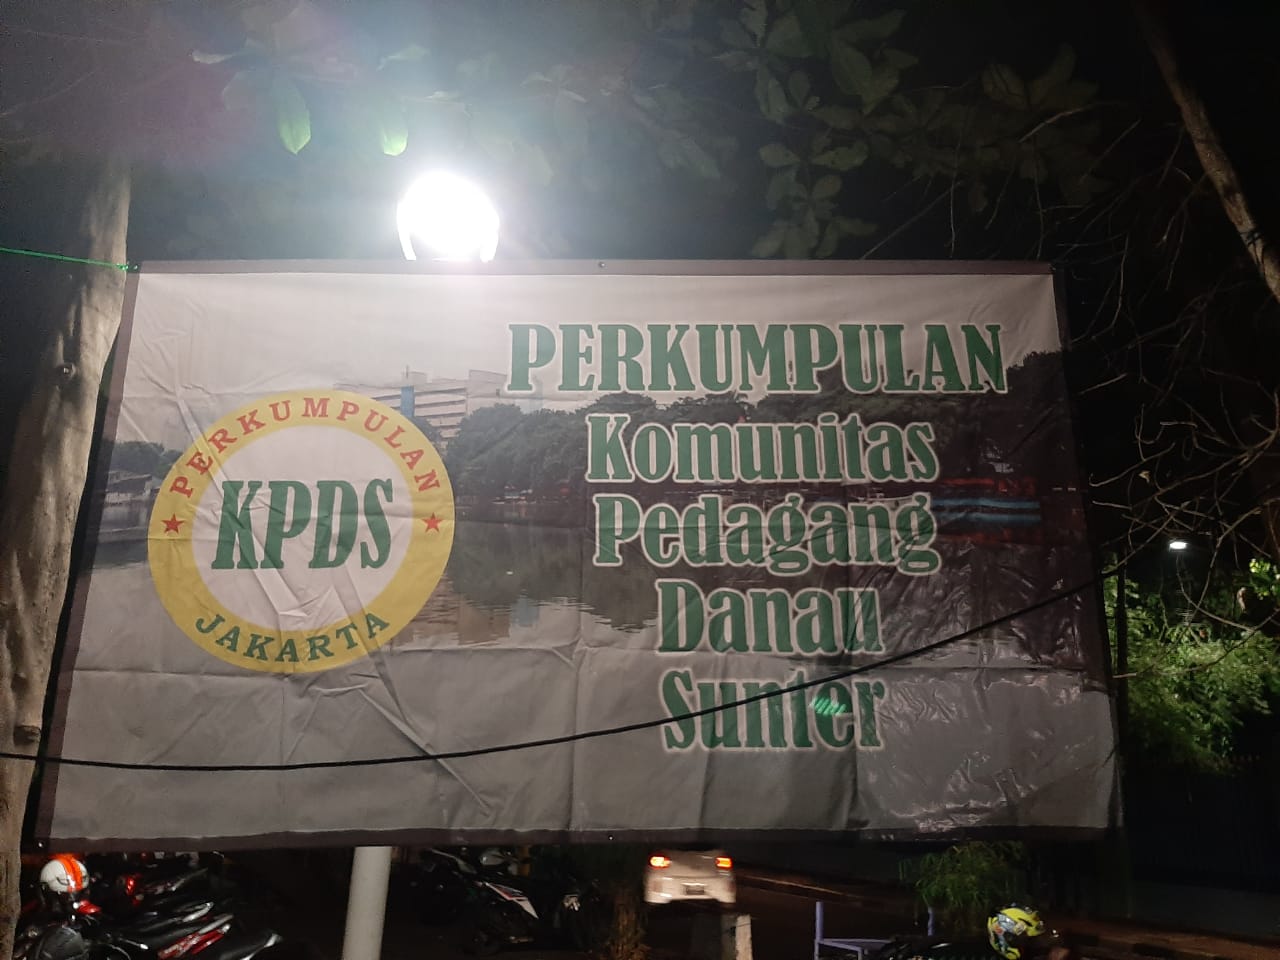 Para Pedagang Danau Sunter Geram ,Terkait oknum Yang Mencopot Banner PKPDS